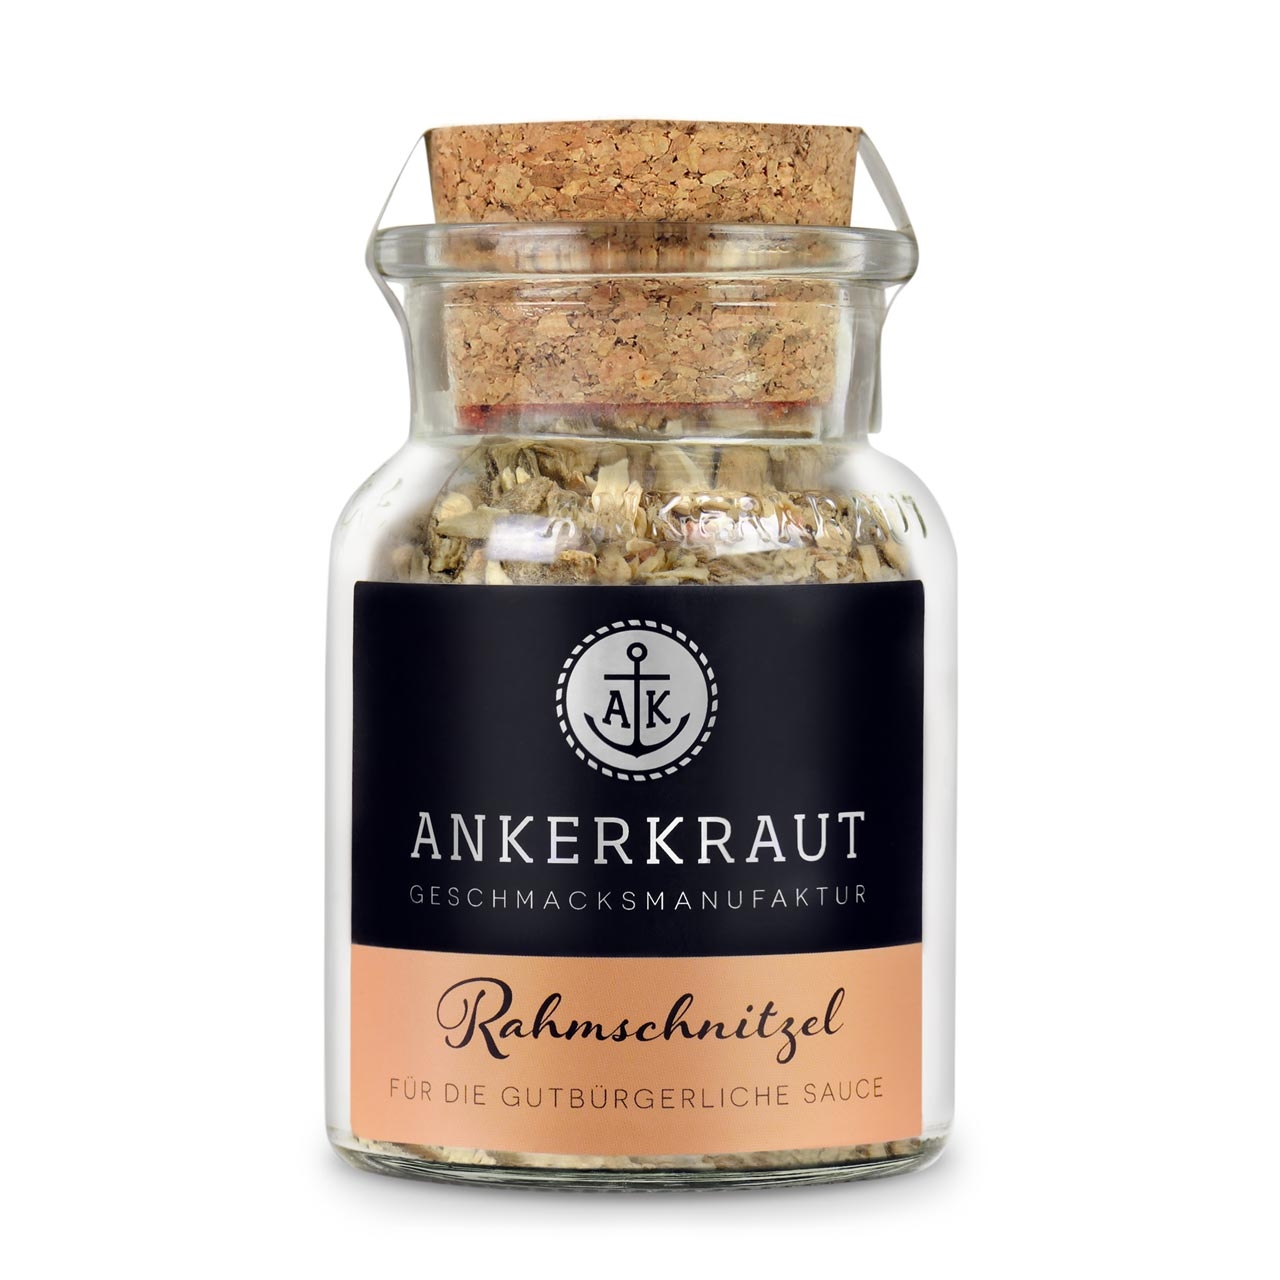 Ankerkraut Rahmschnitzel